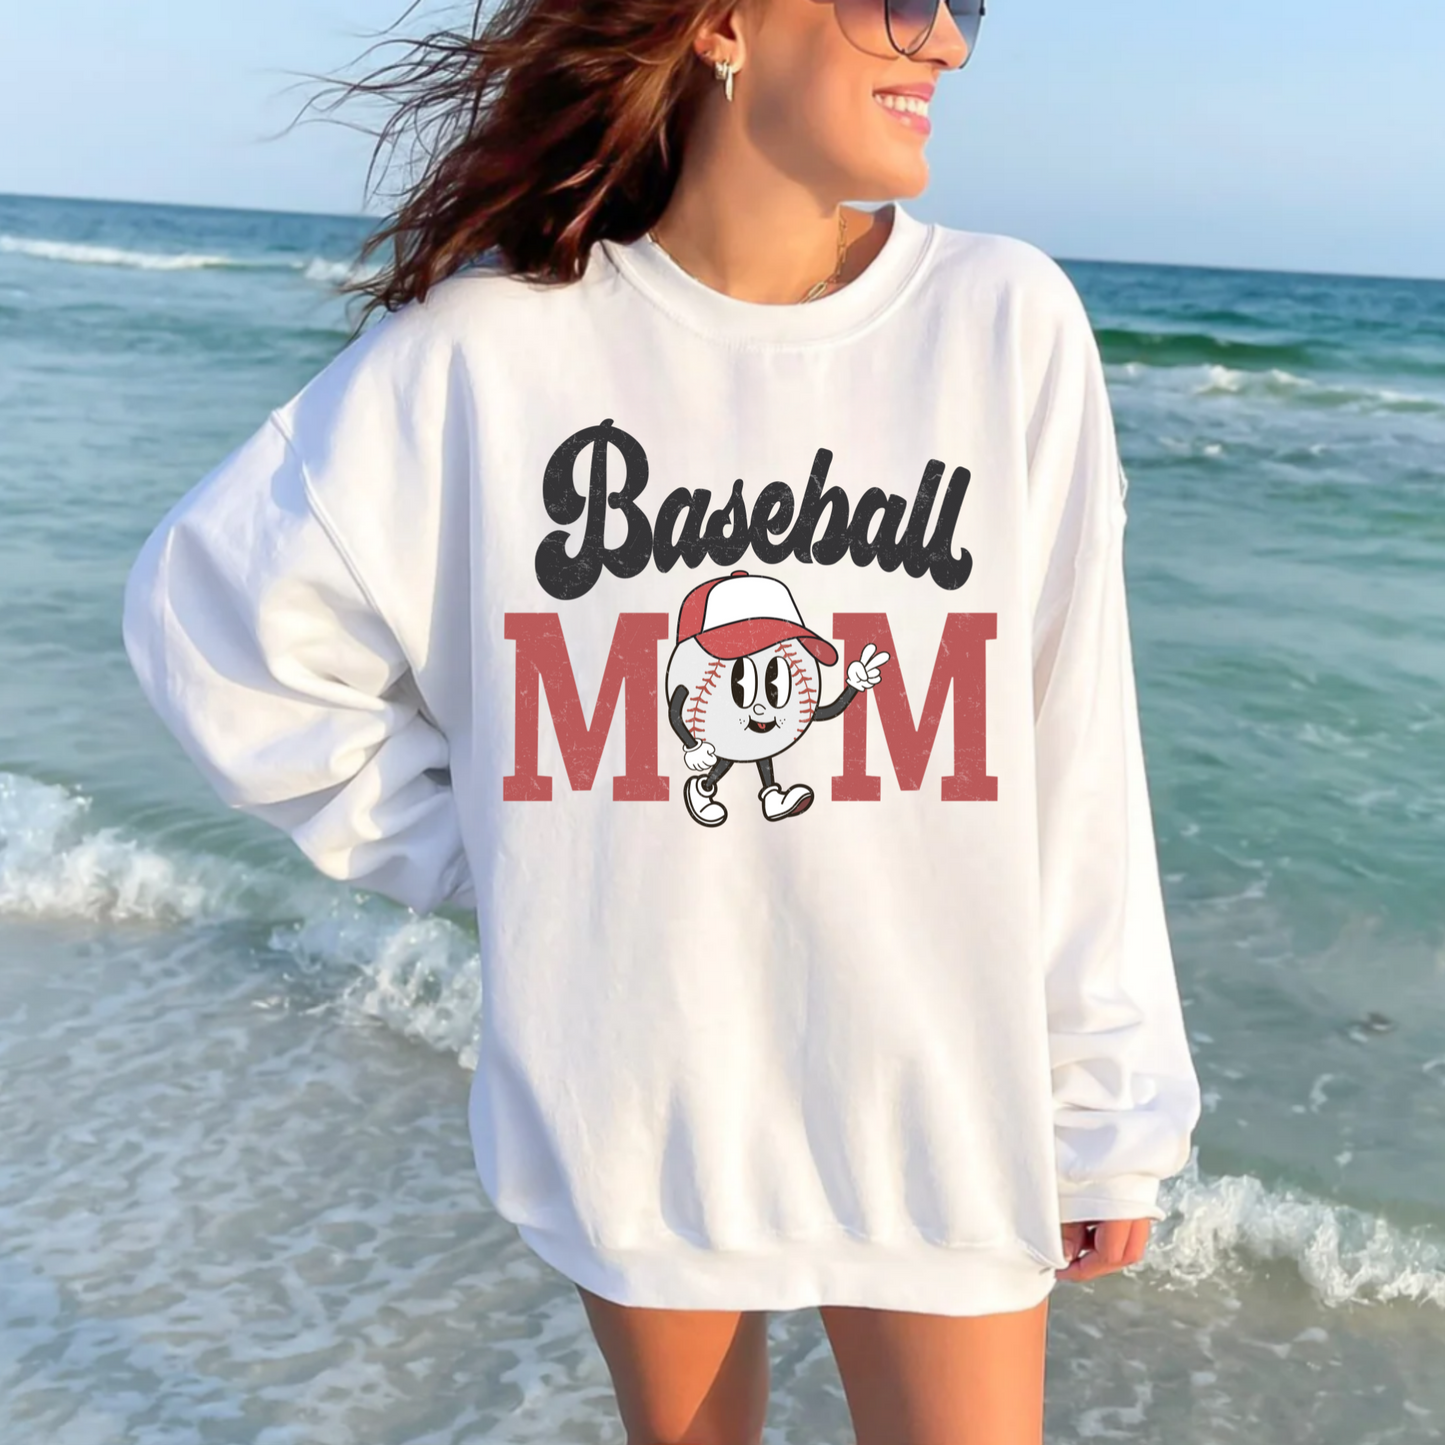 (shirt not included) Baseball MOM  - Clear Film Transfer